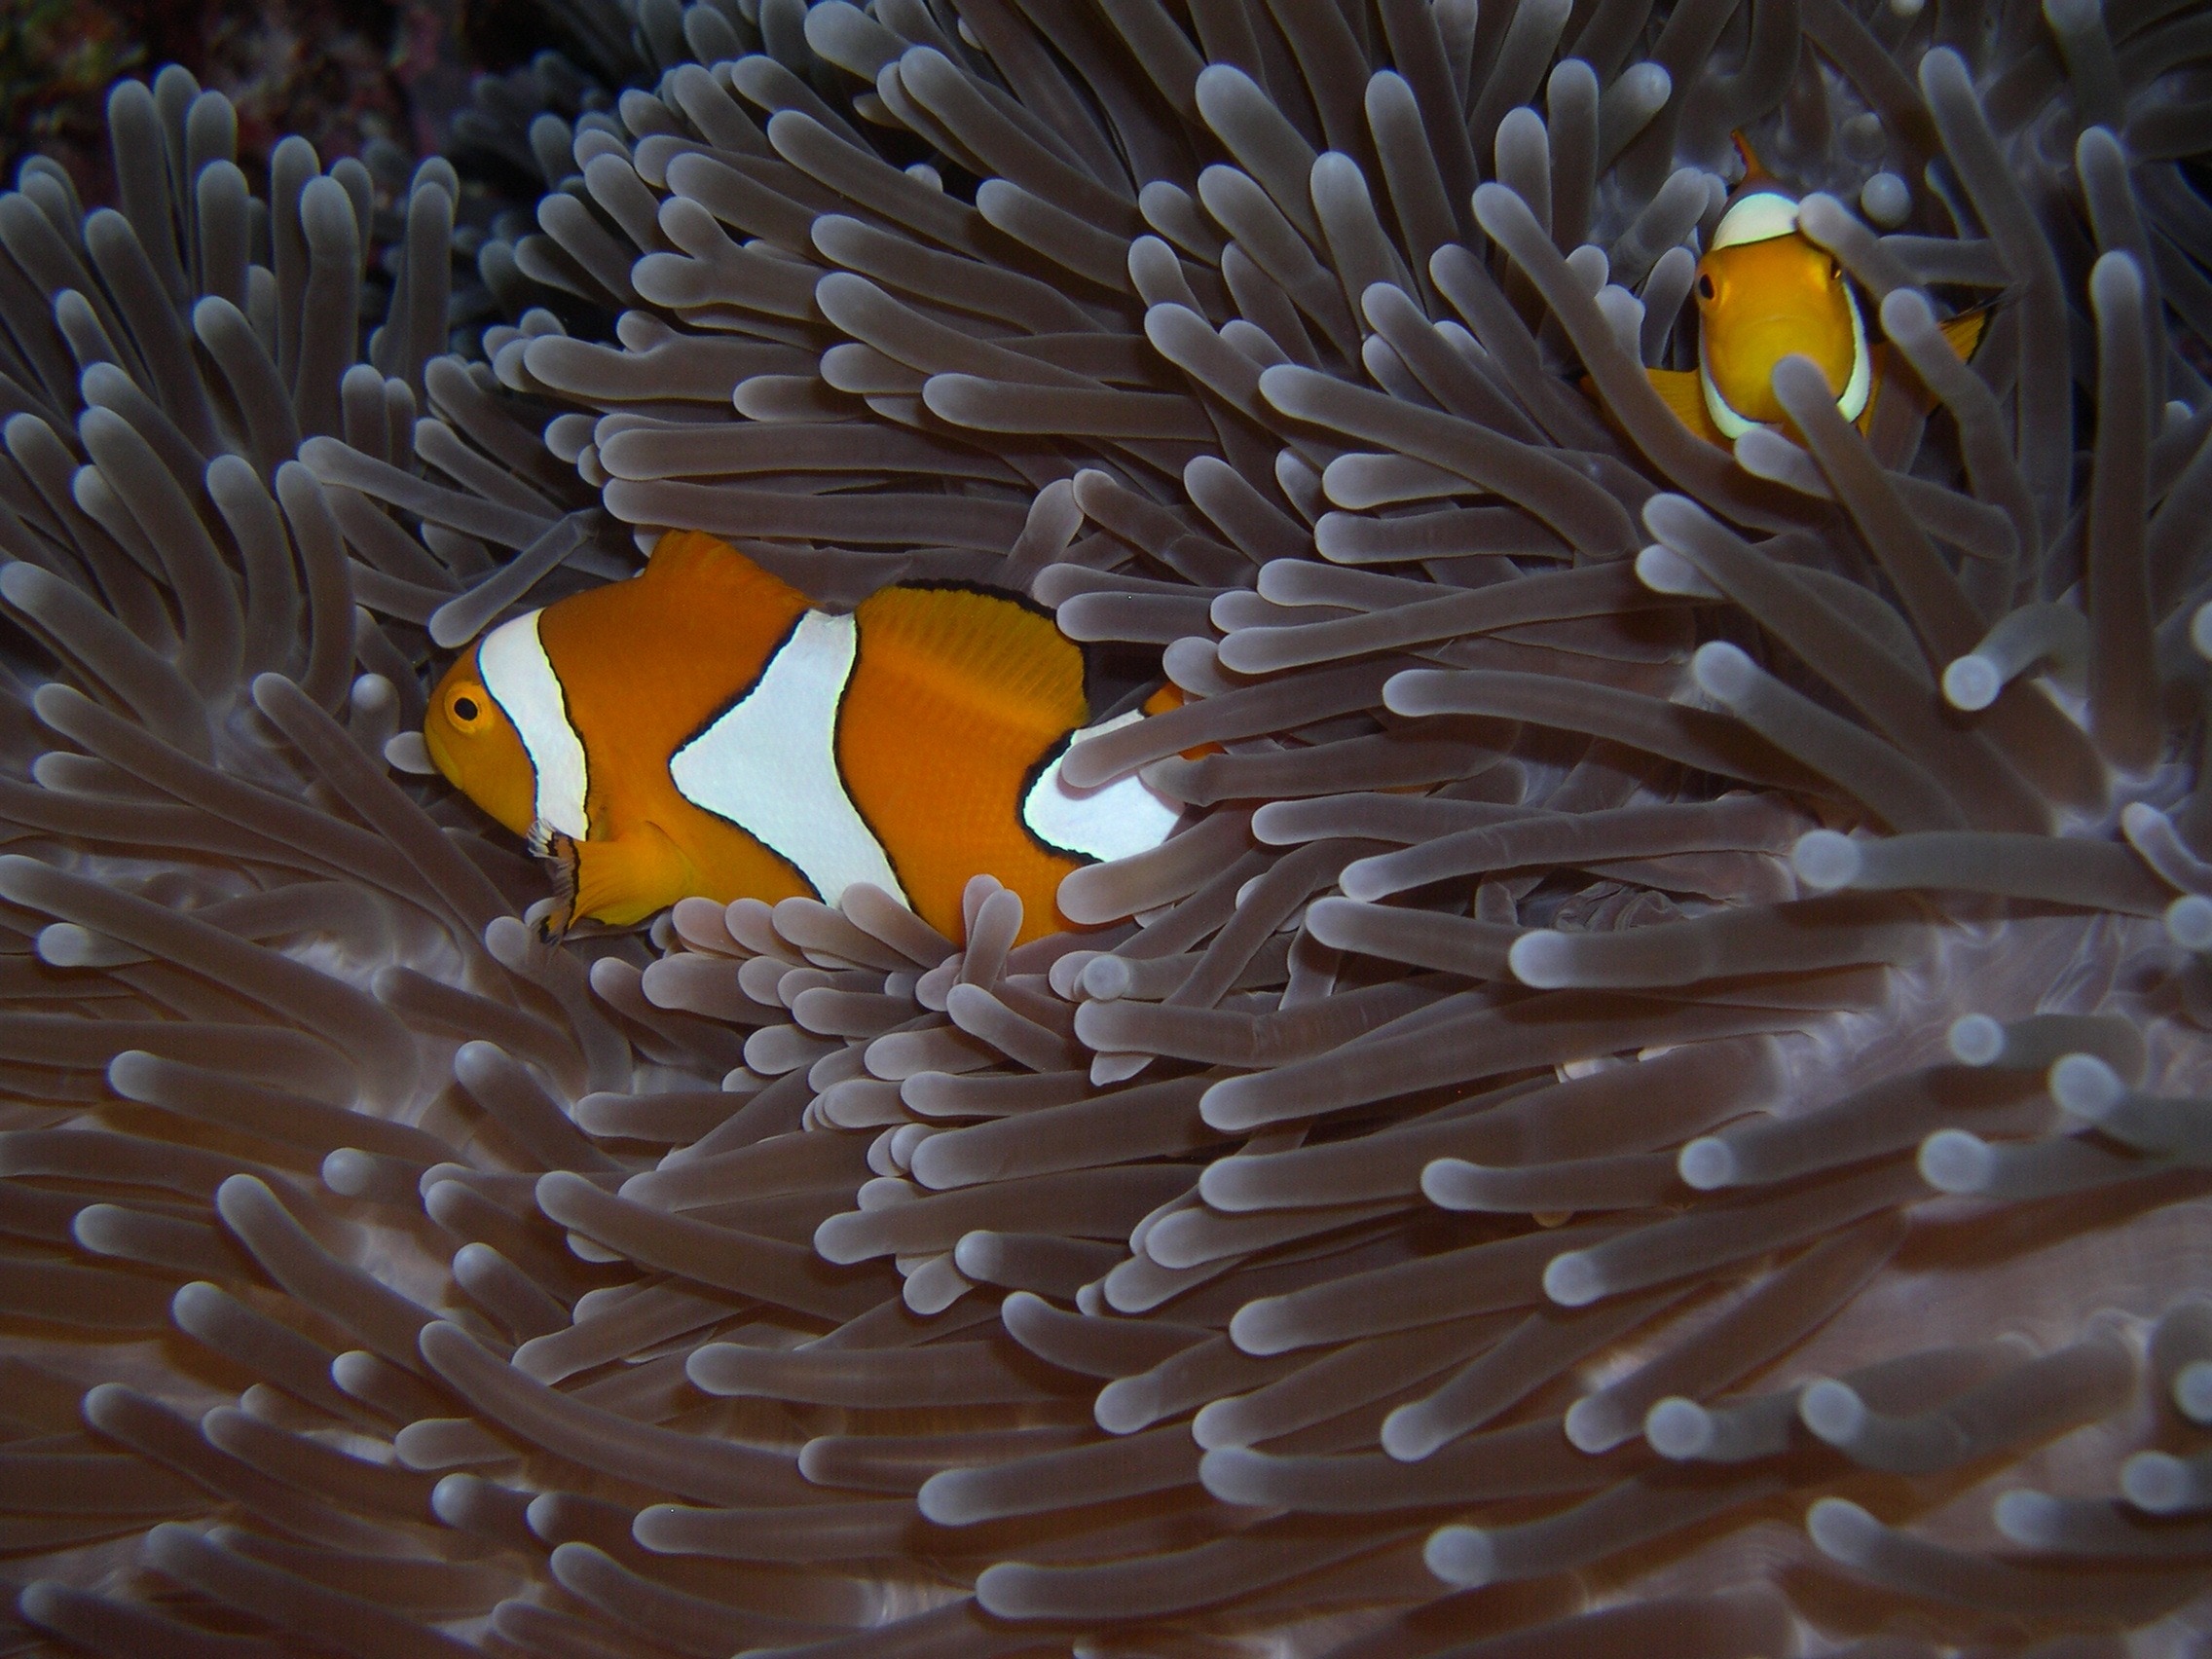 clown fish and brown sea anemones